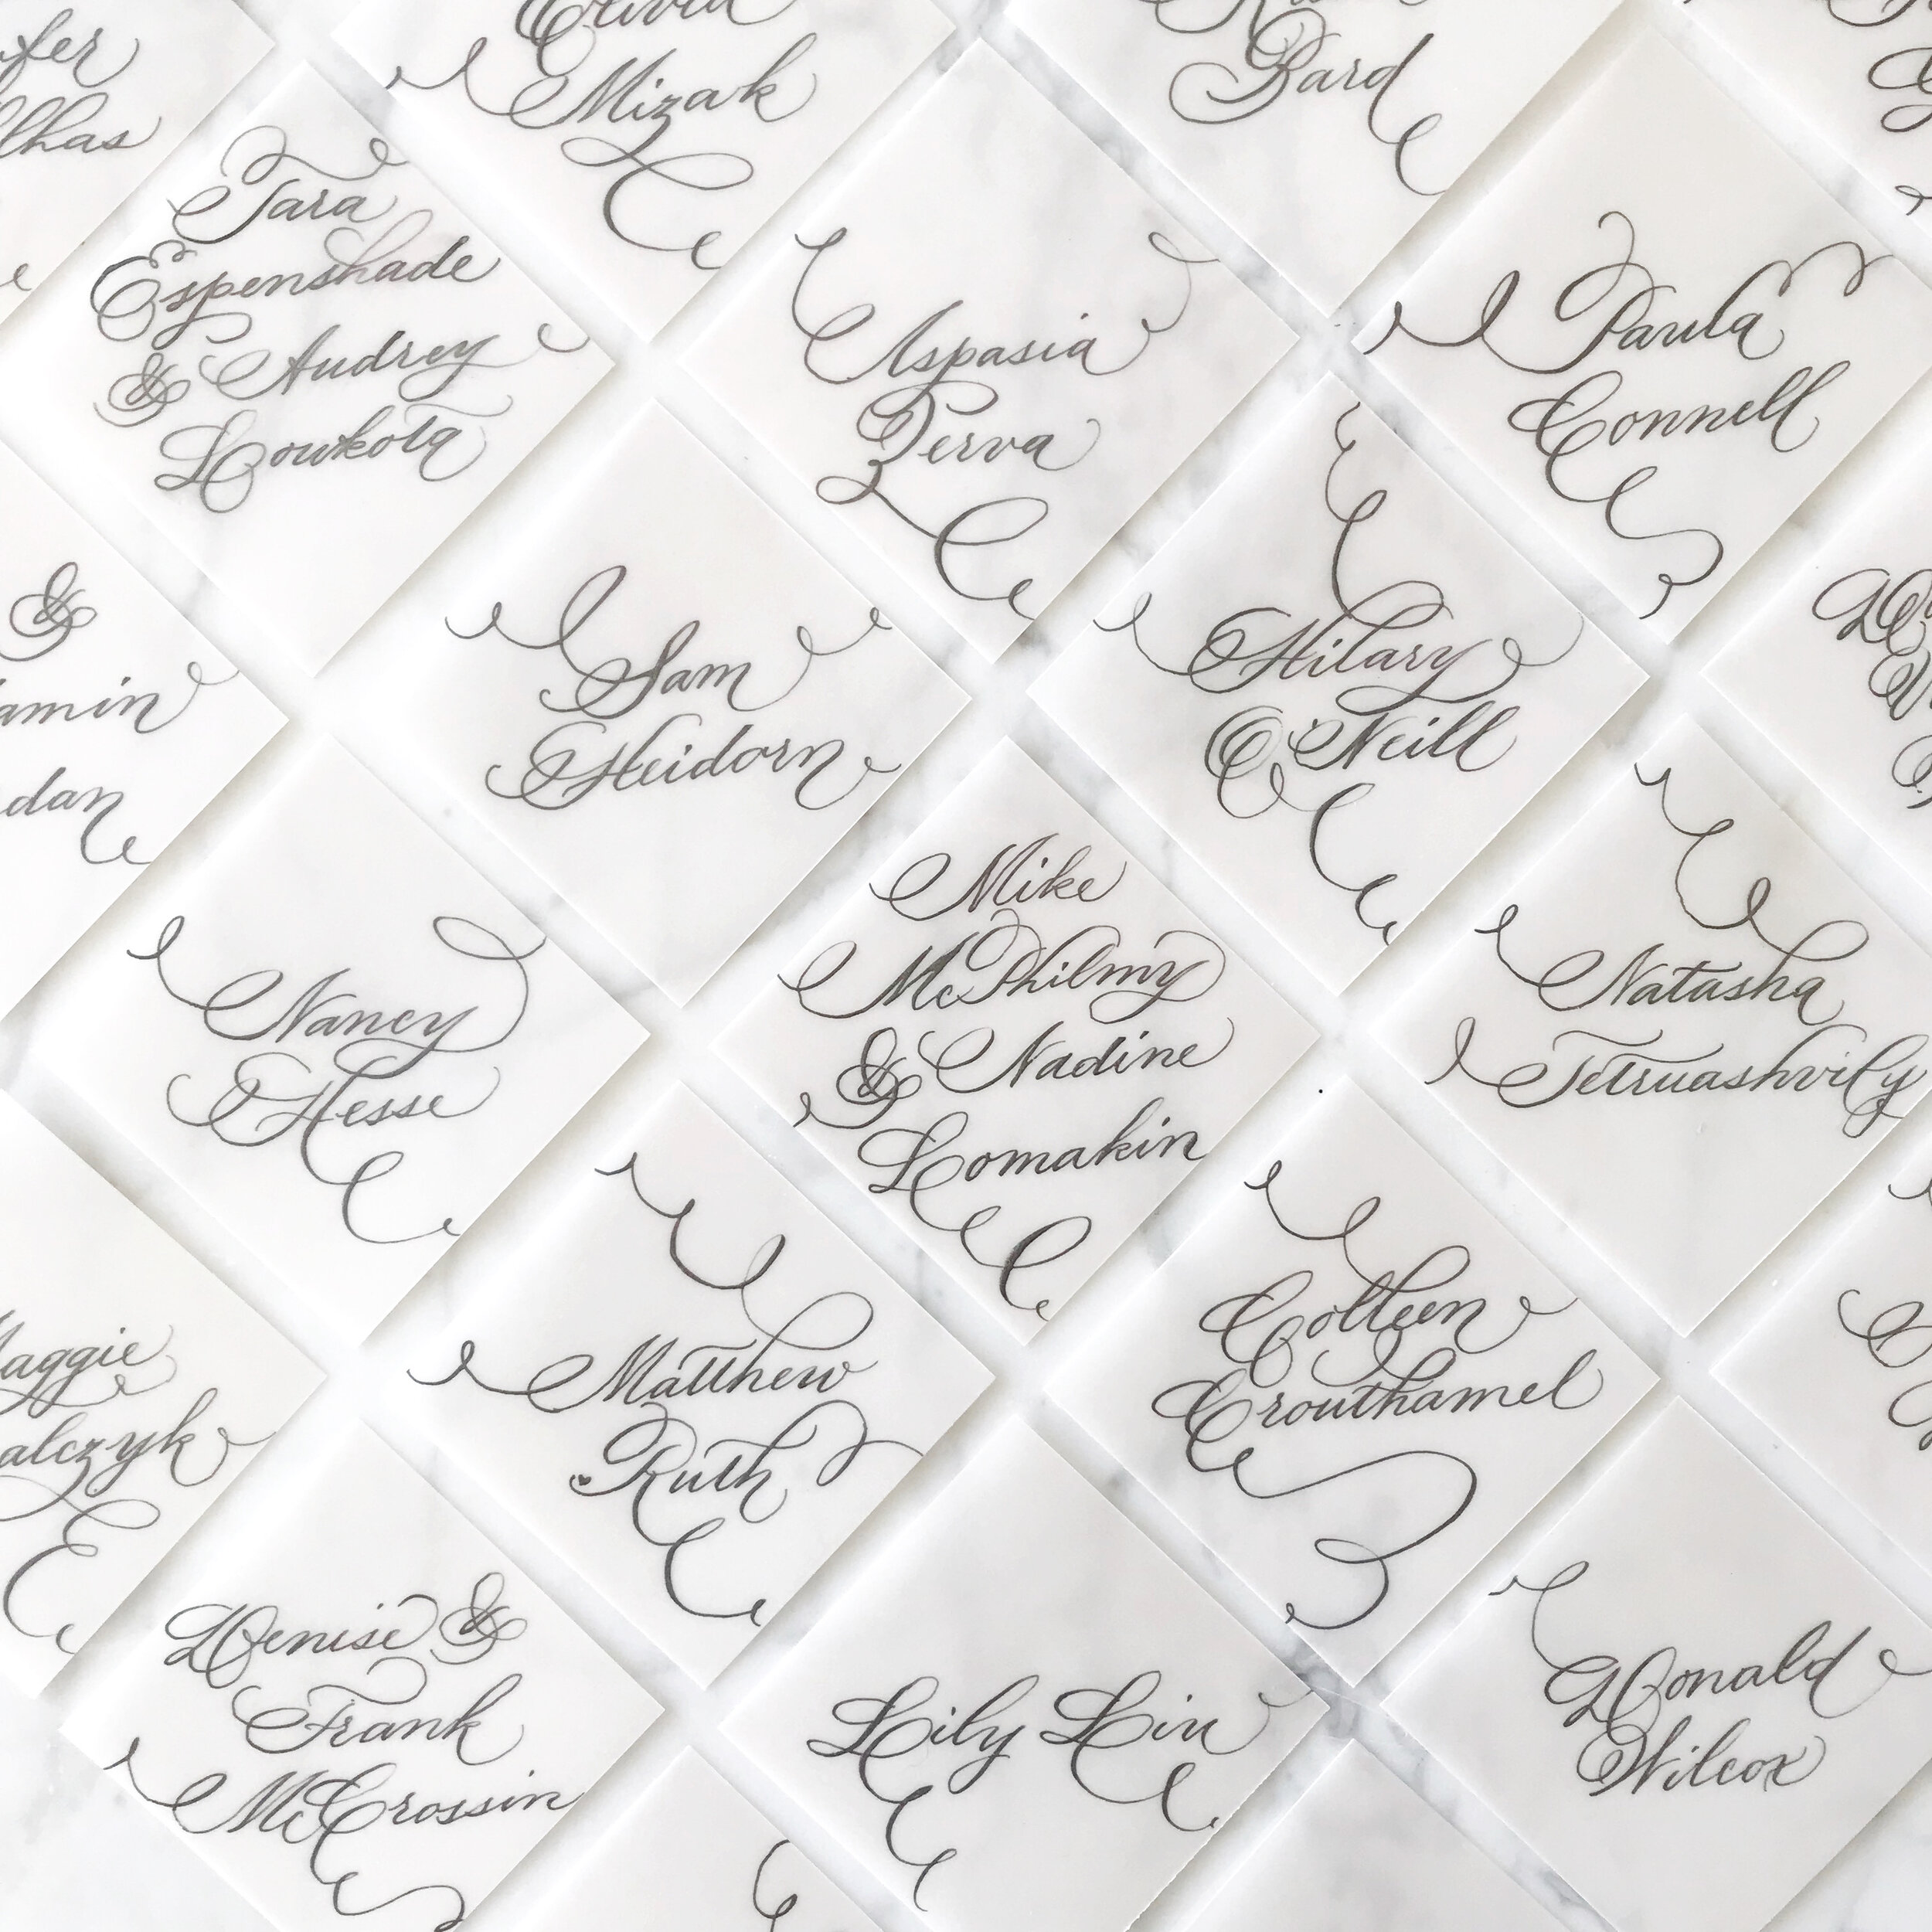 Formal Flourished Calligraphy Wedding Invitations | Vellum Paper | Black Tie Wedding